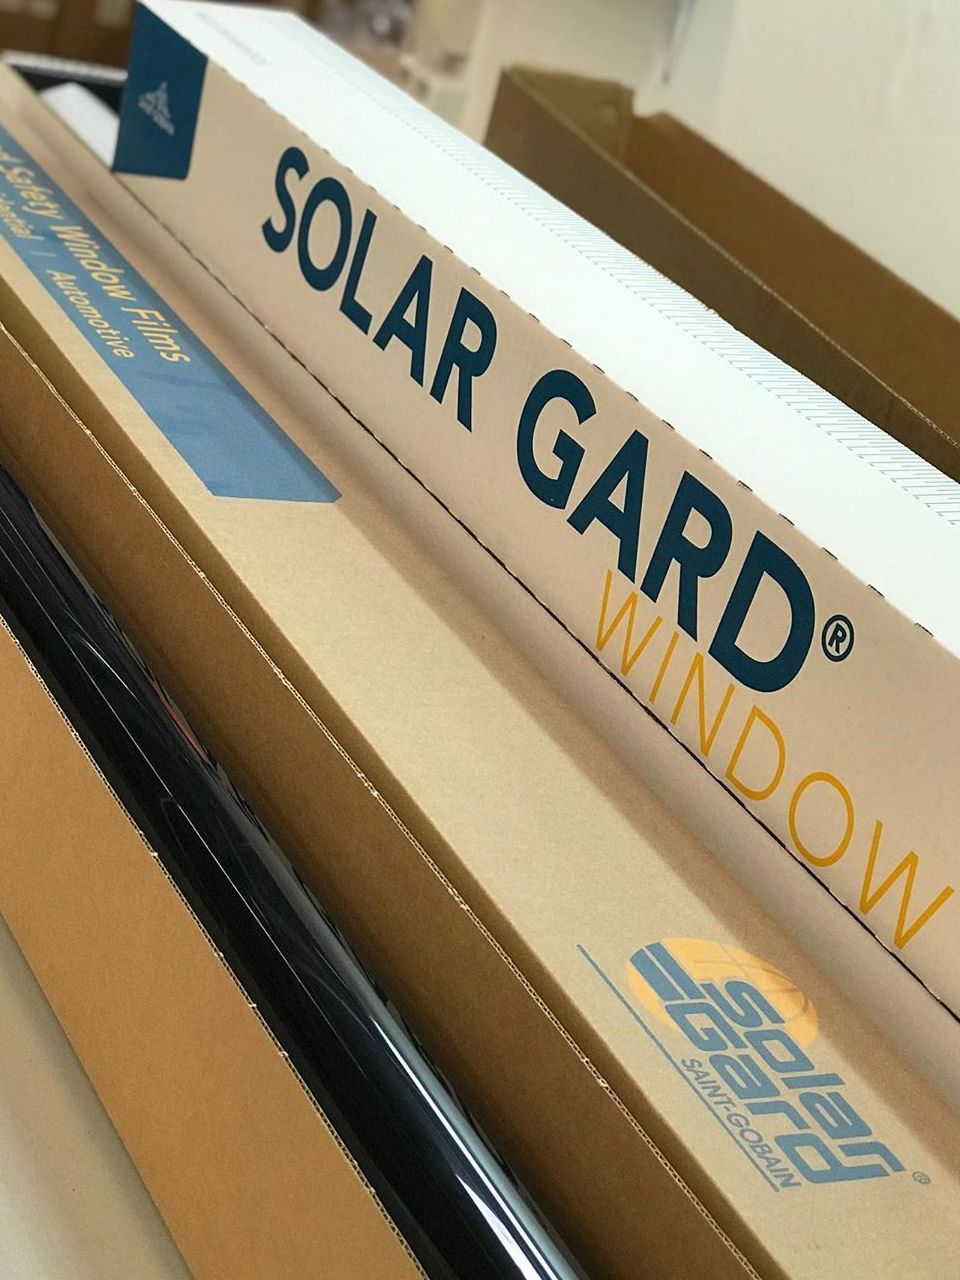 Solar Gard Magnum 2%. Найтемніша тонувальна плівка